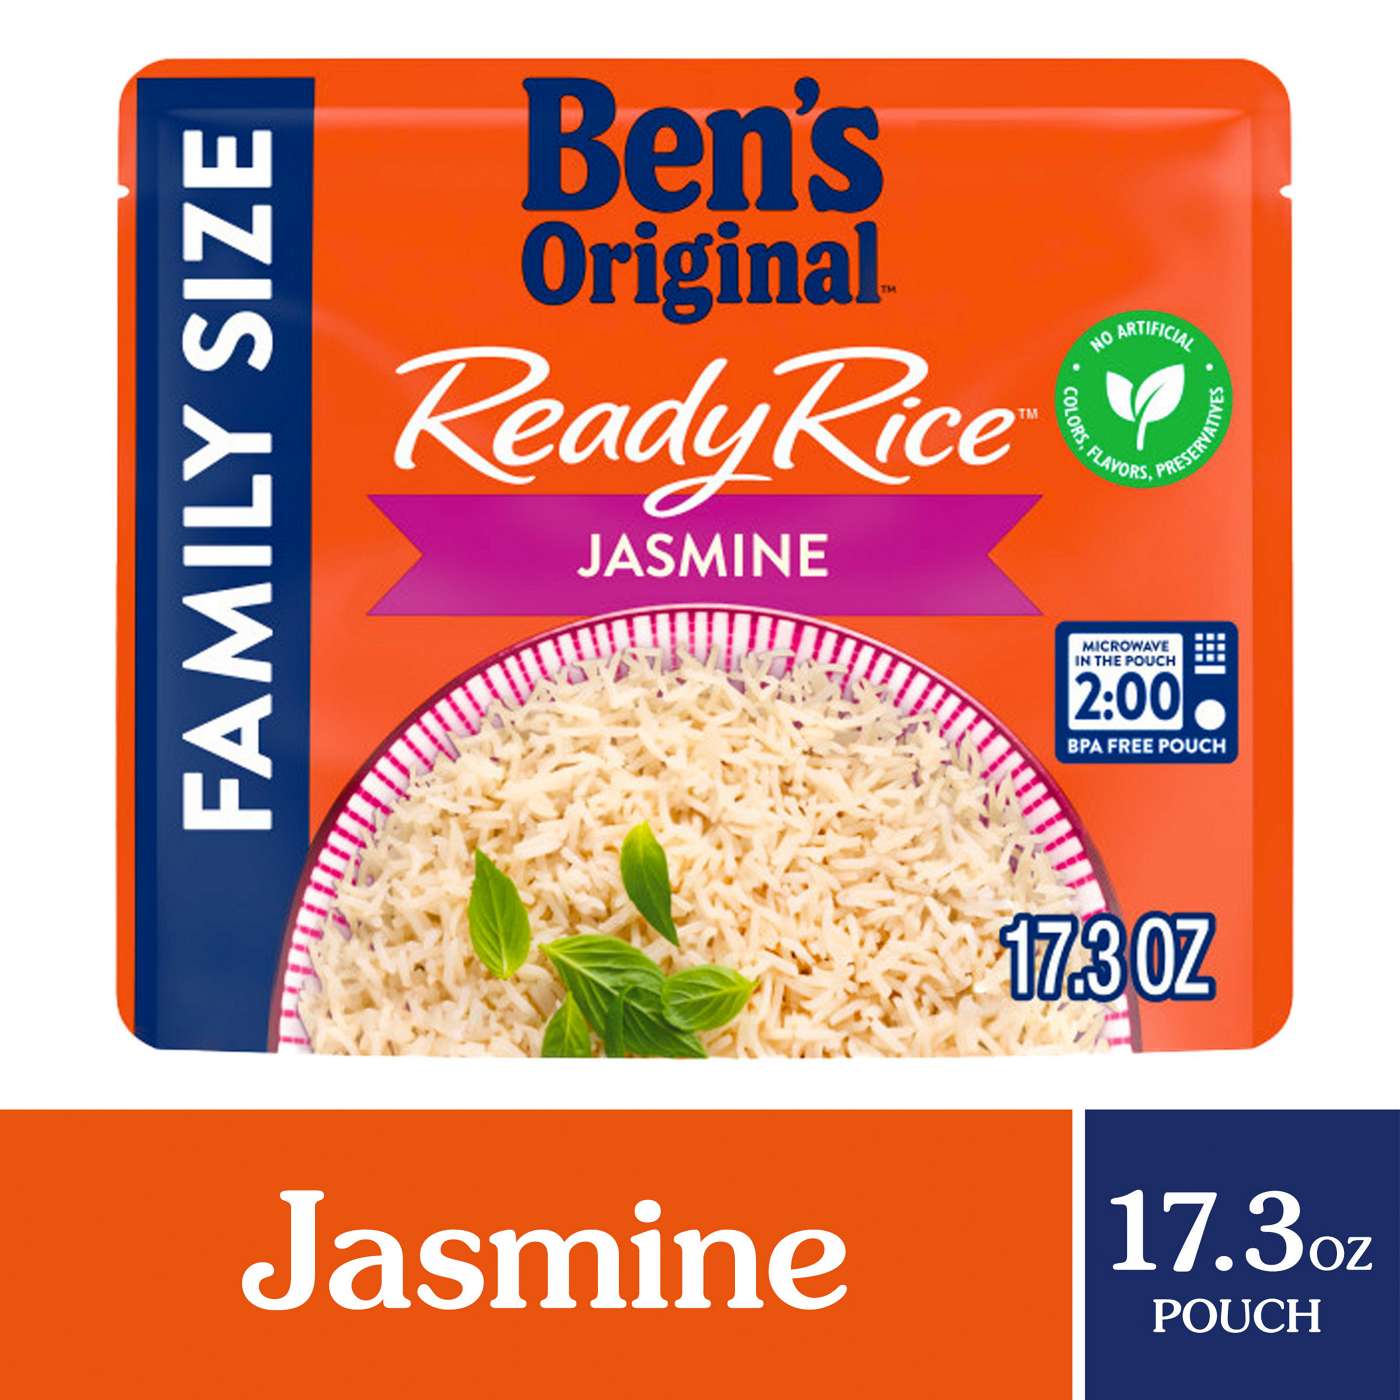 Ben's Original Ready Rice Jasmine Family Size Rice; image 4 of 7